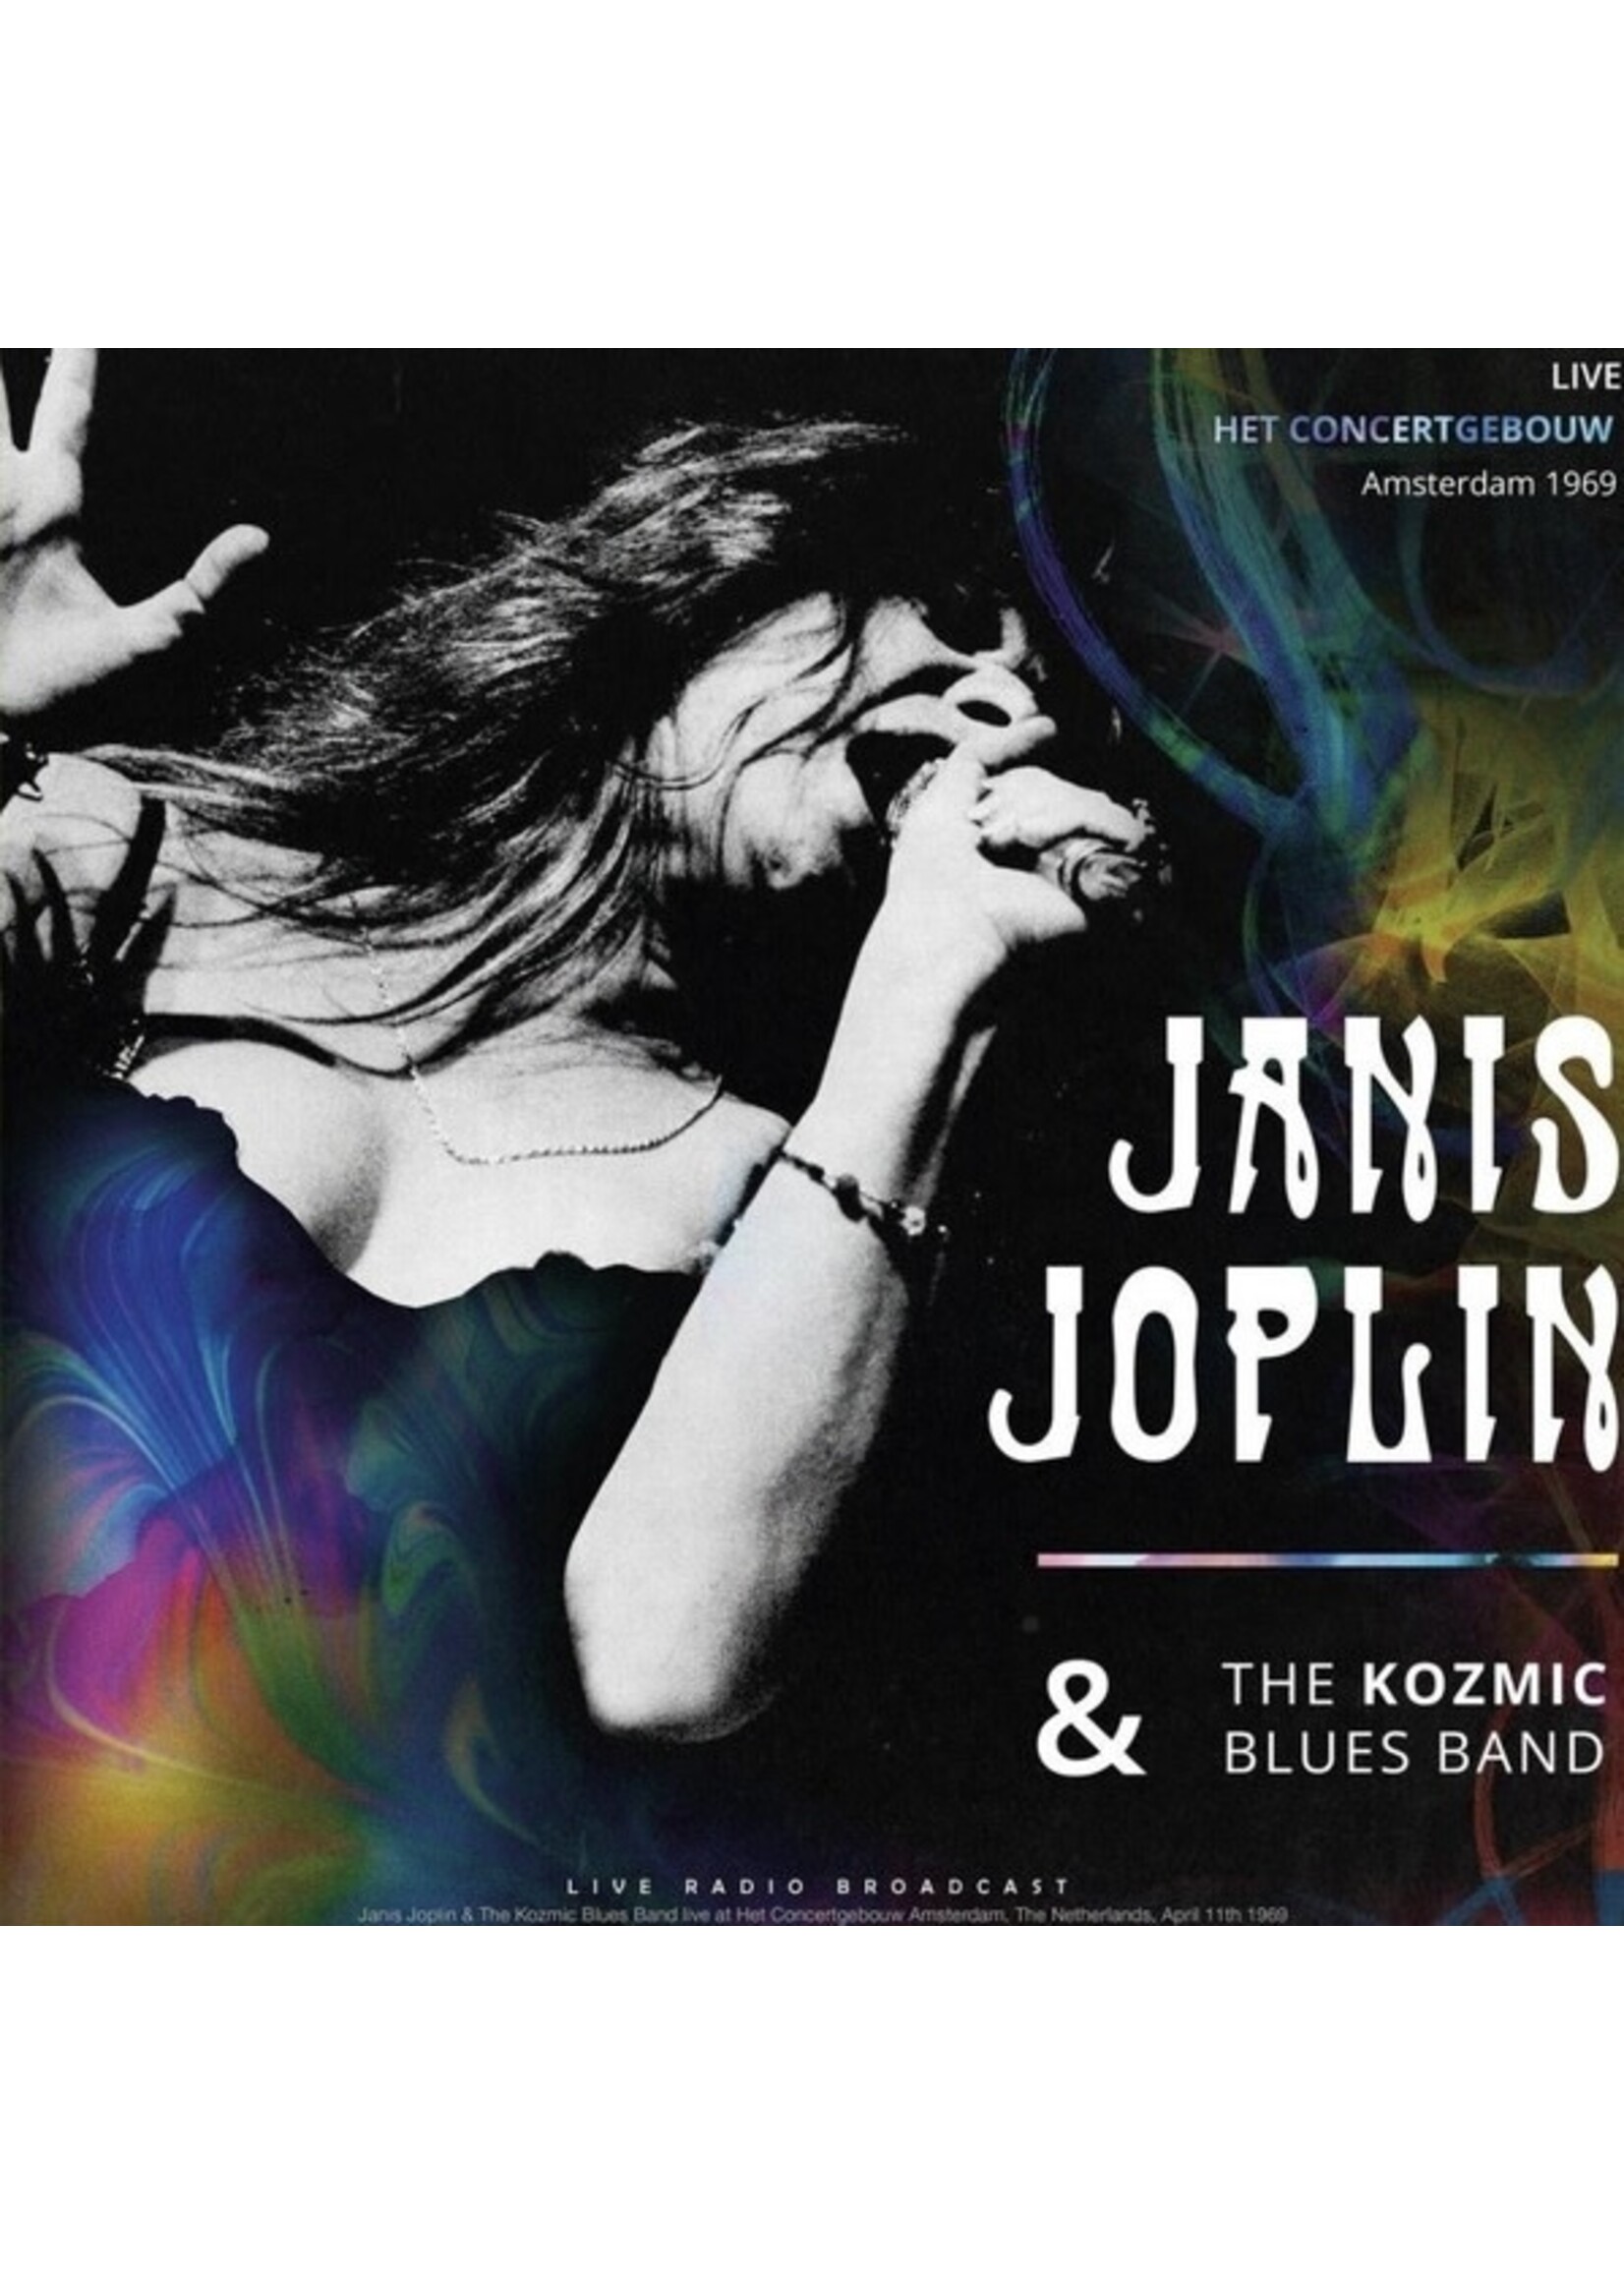 Monostereo Janis Joplin & The Kozmic Blues Band Live at Het Concertgebouw Amsterdam 1969